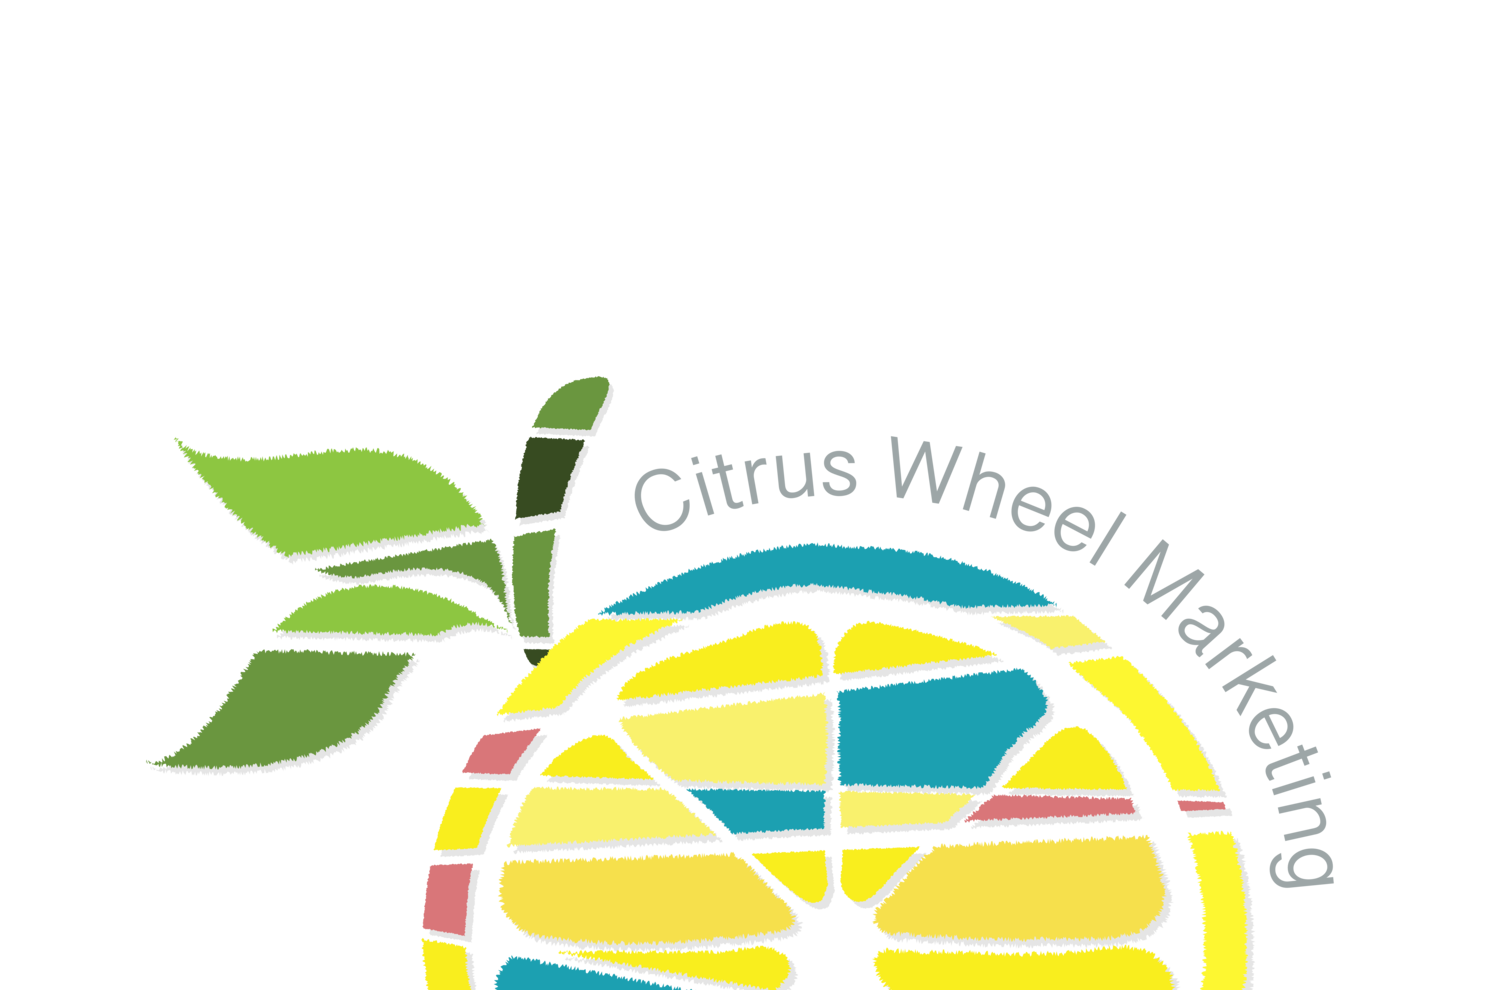 Citrus Wheel Marketing